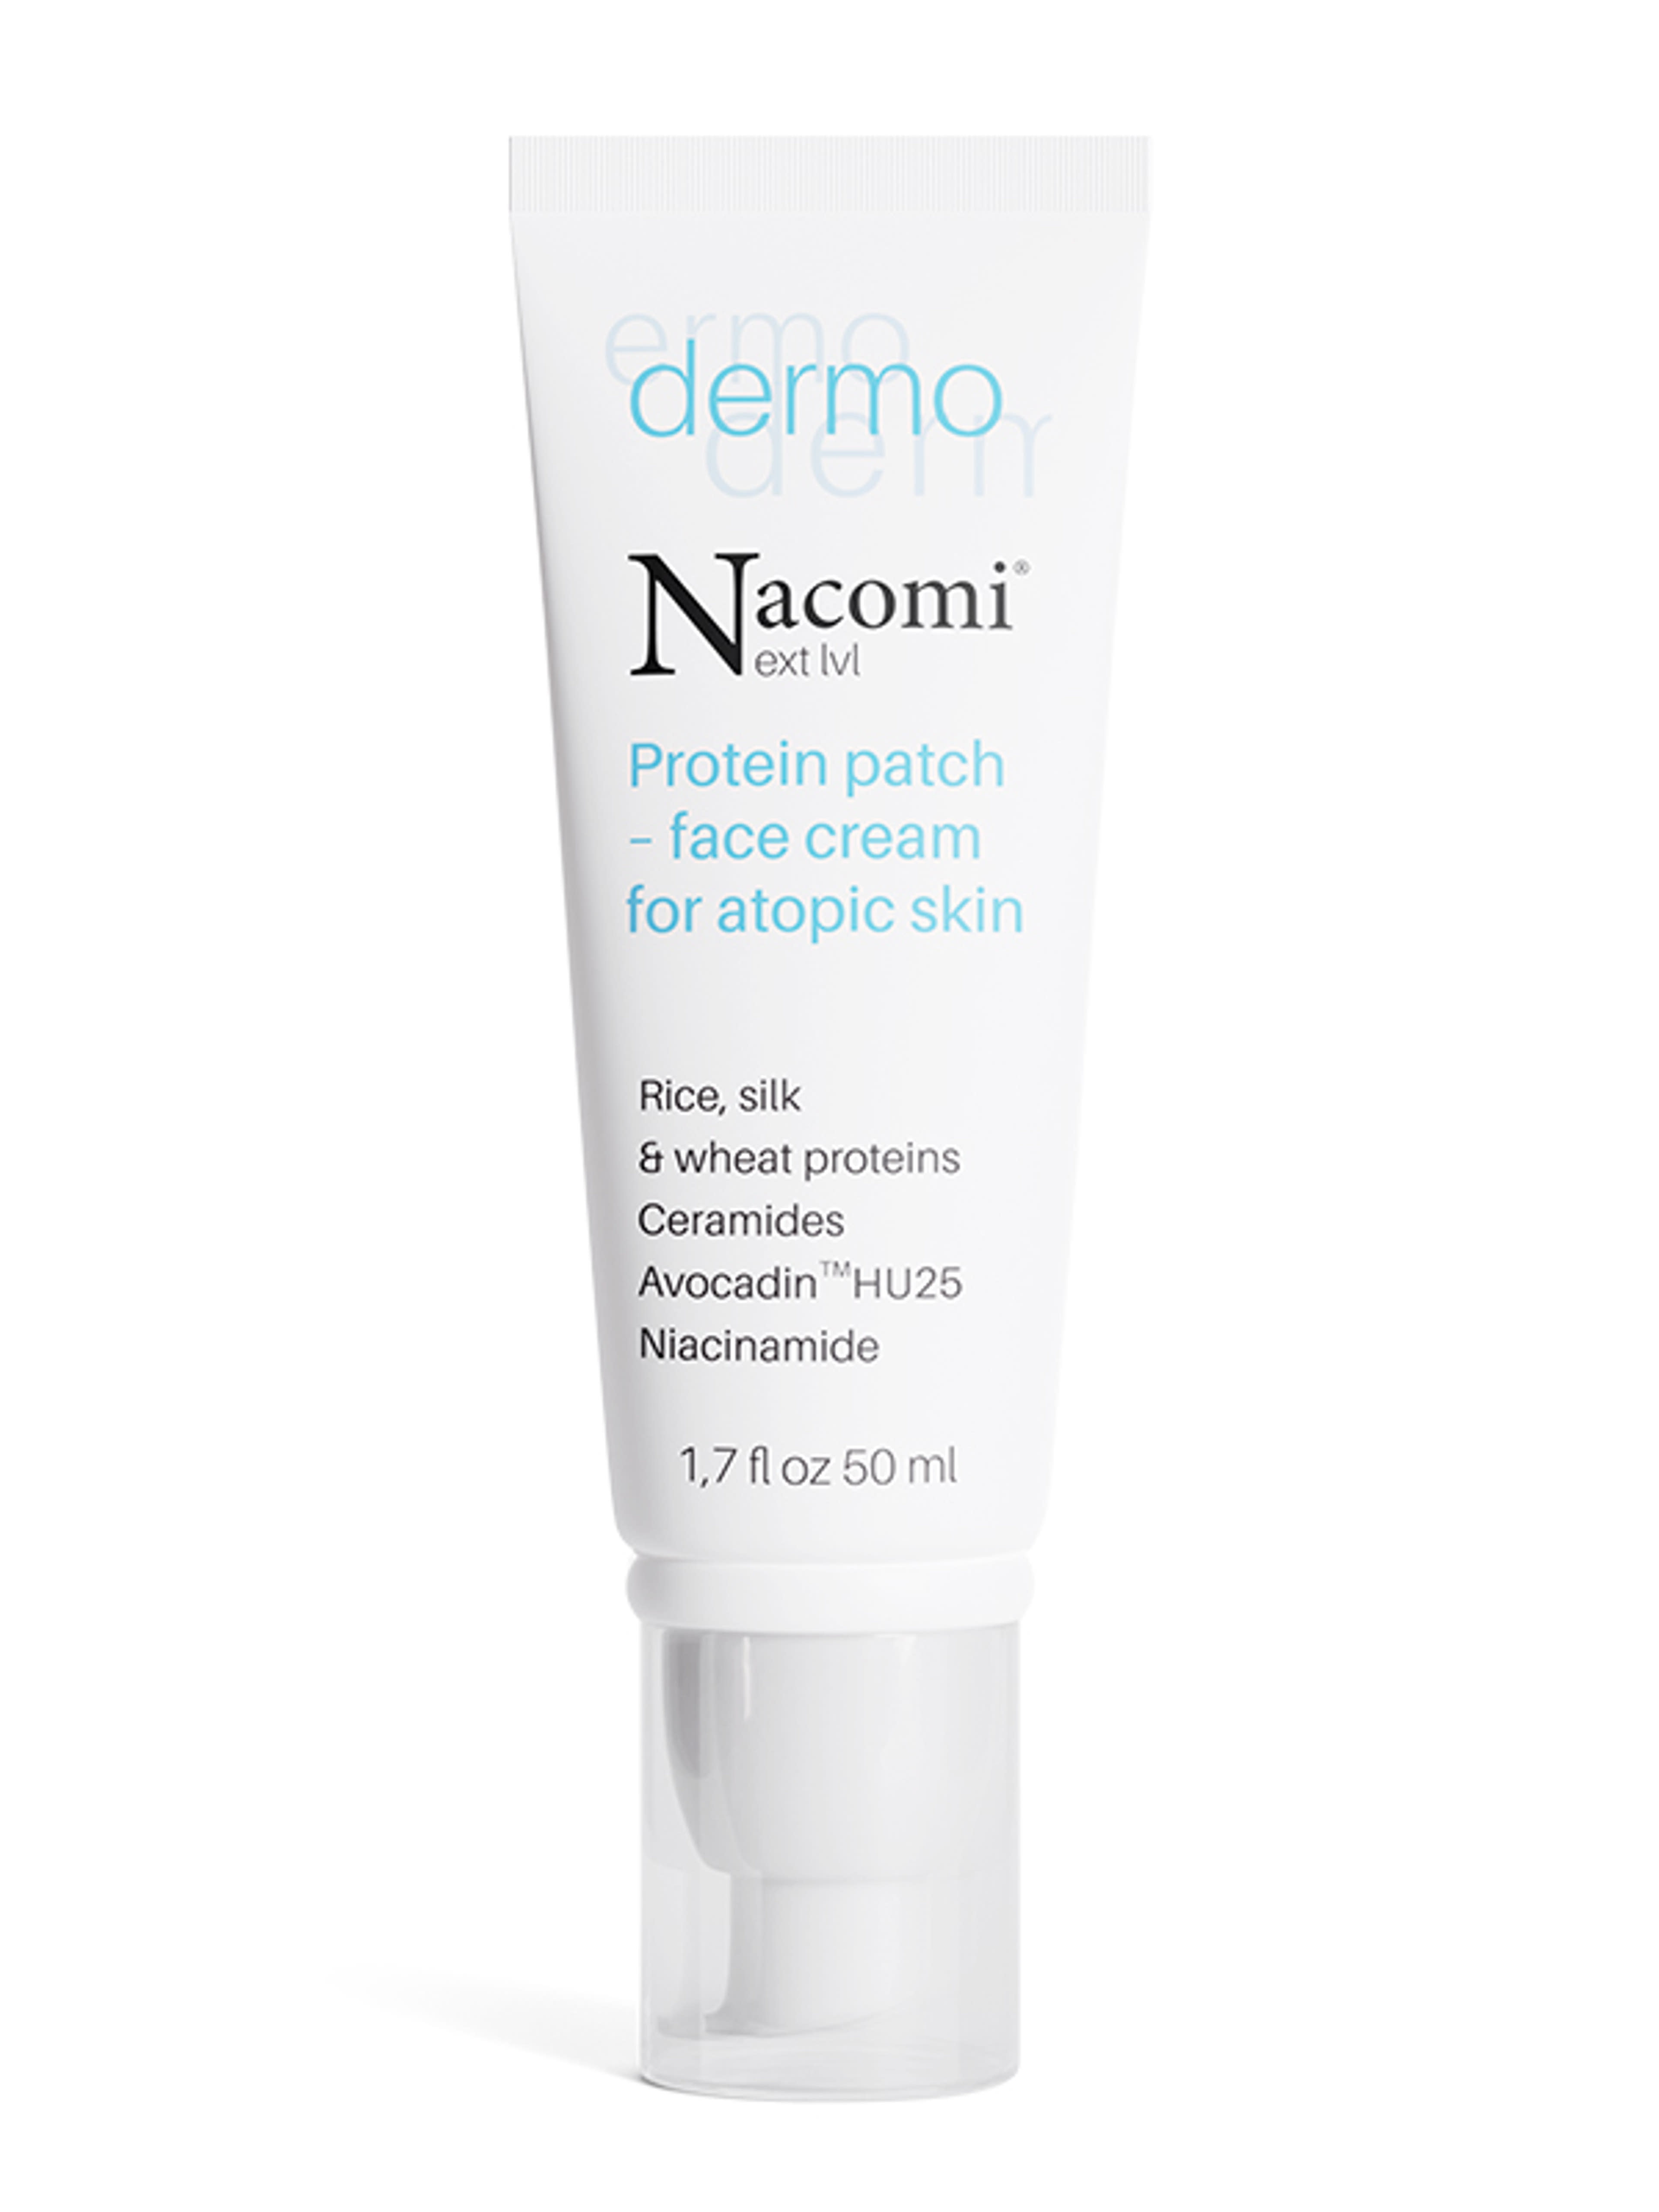 Nacomi Dermo proteines krém atópiás bőrre - 50 ml